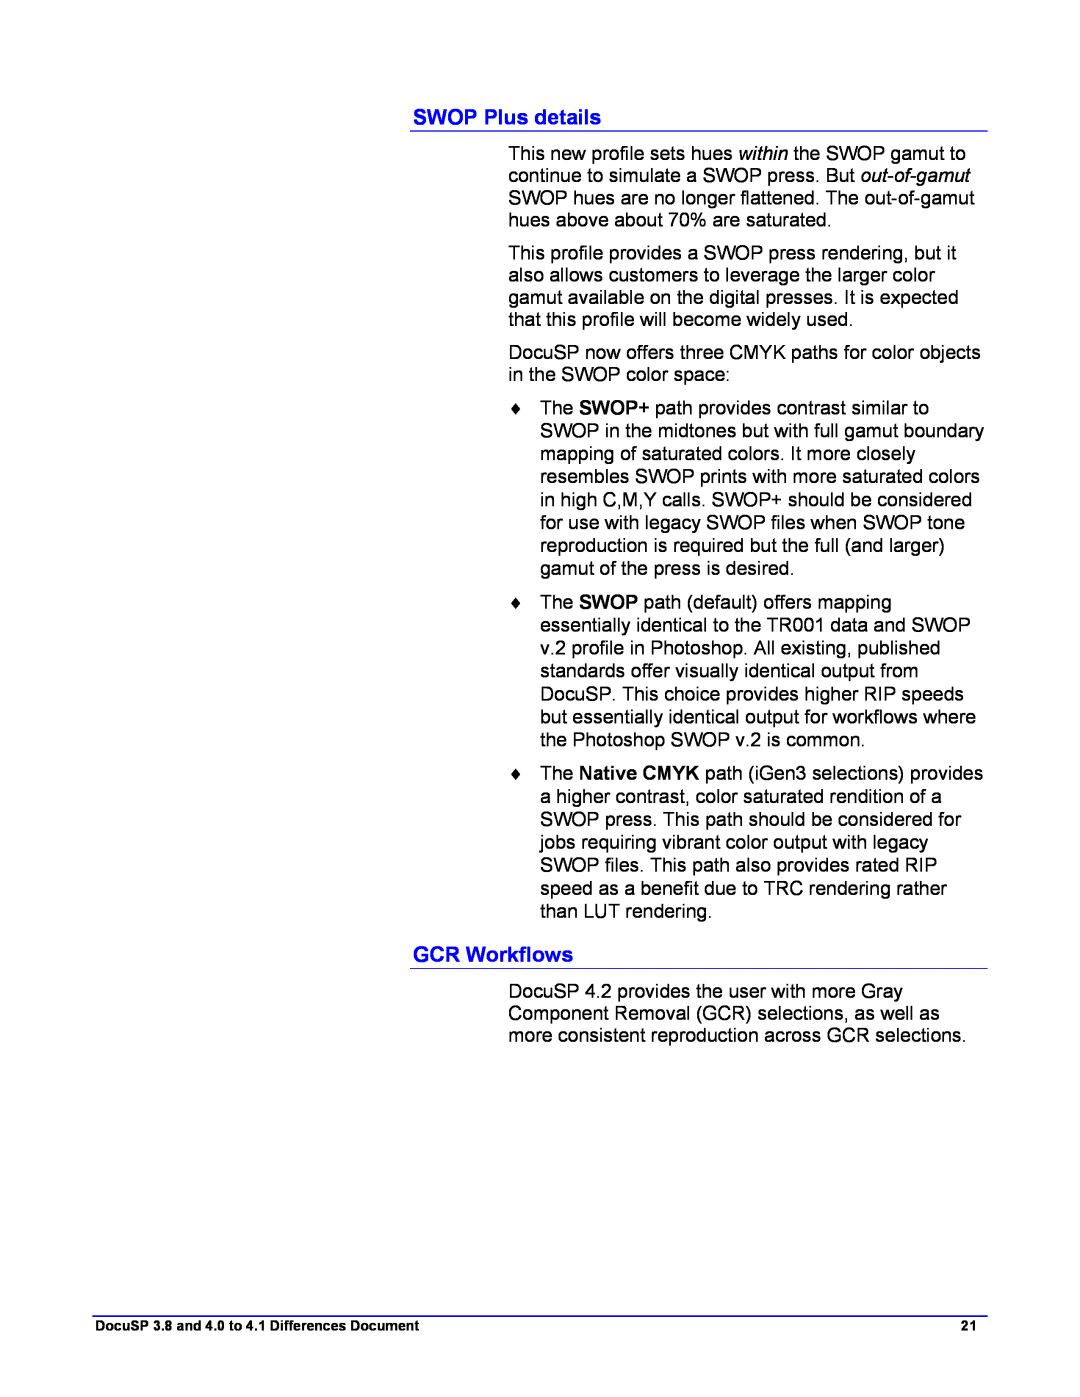 Xerox 4.1, 4.2 manual SWOP Plus details, GCR Workflows 